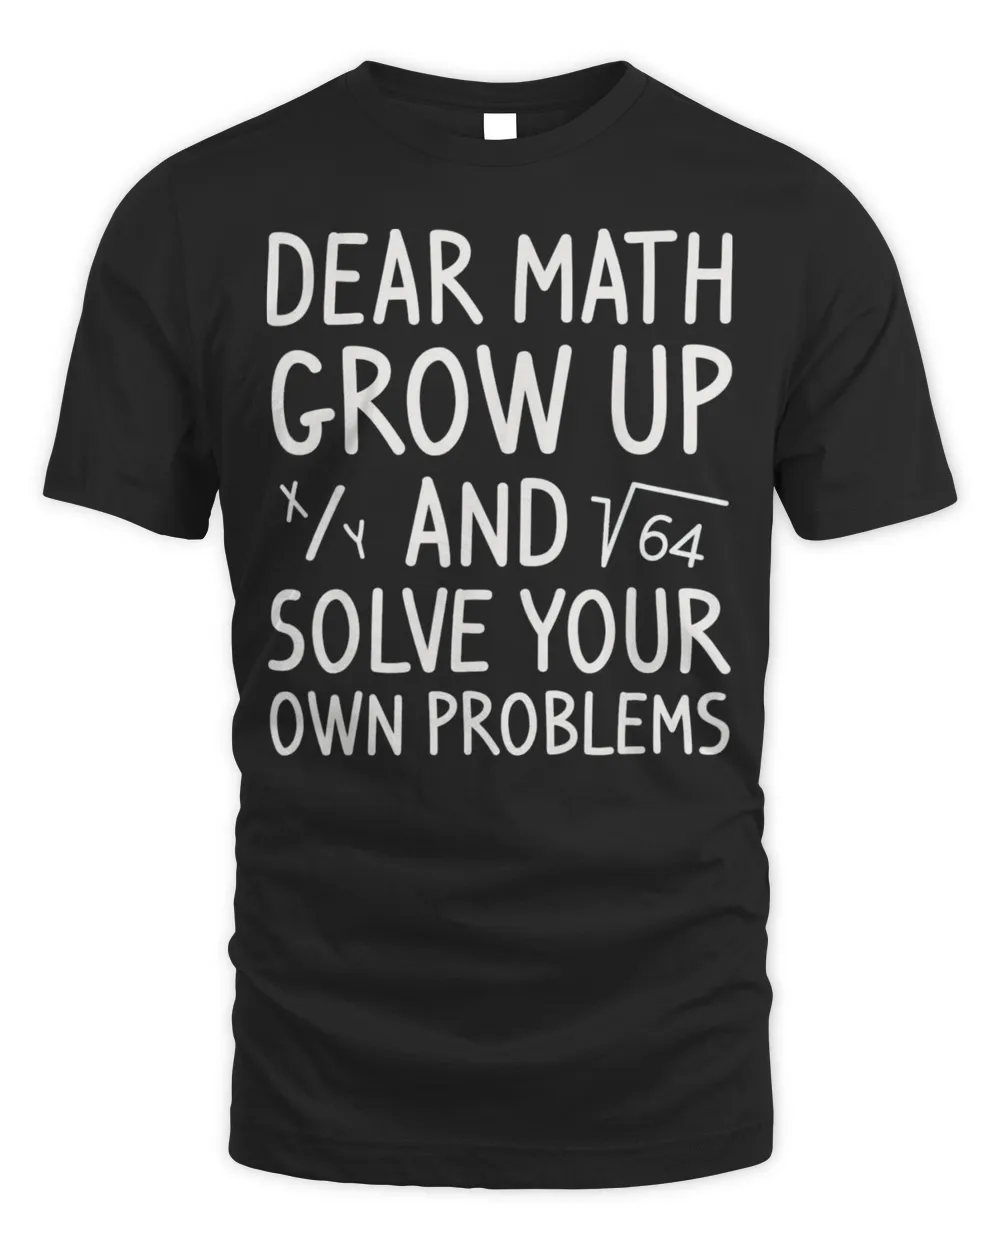 Dear Math Grow Up And Solve Your Own Problems Math Saying Tee Shirt Unisex Standard T-Shirt black xl